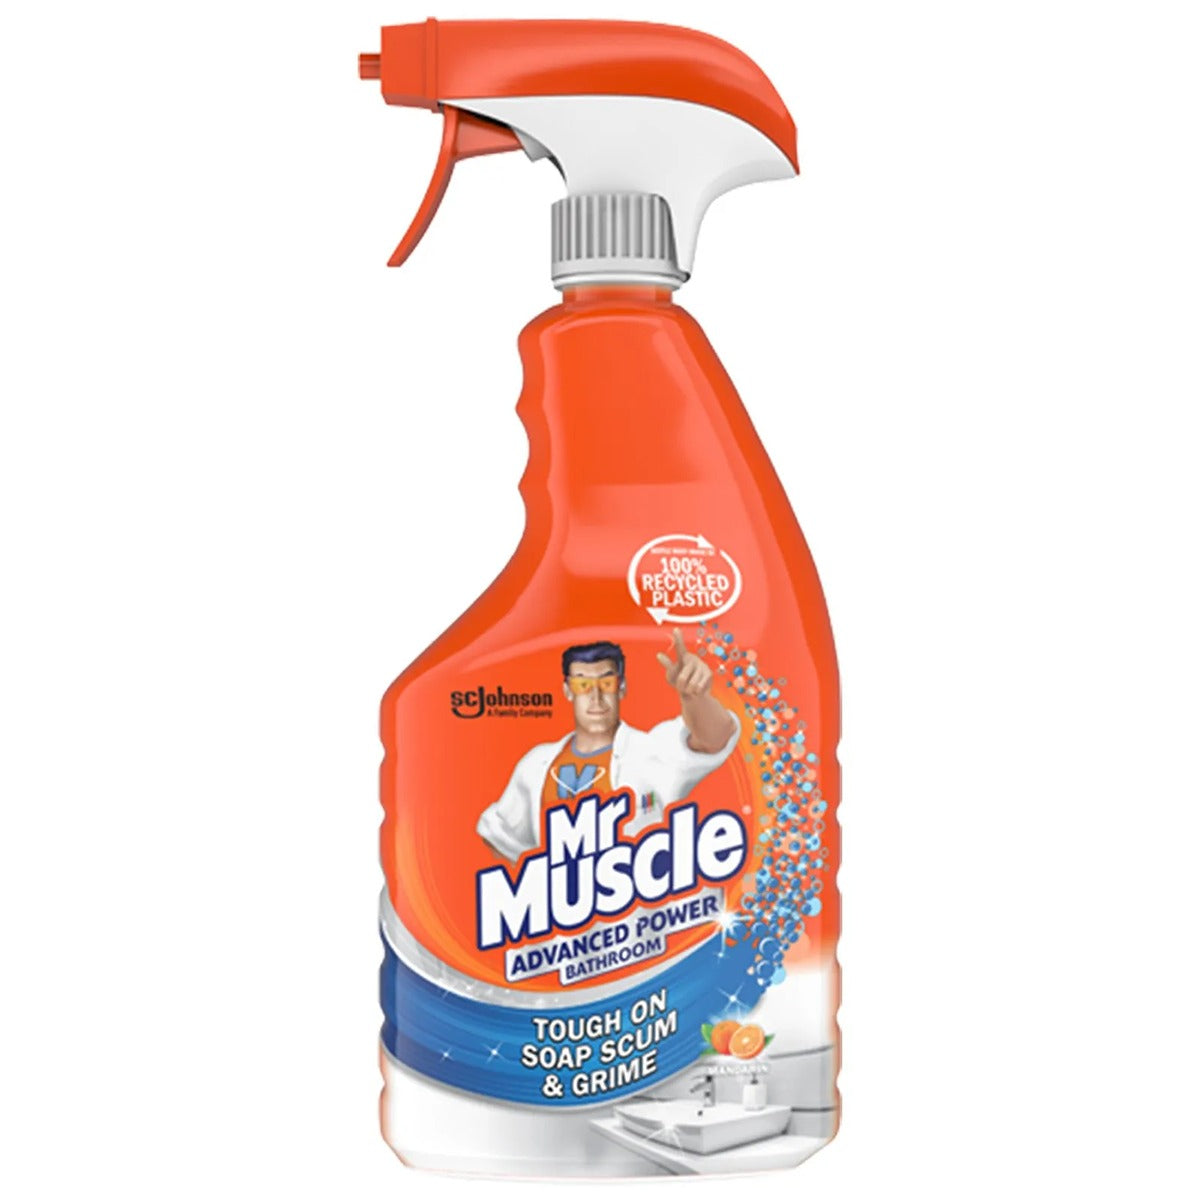 Mr. Muscle - Advanced Power Bathroom Spray - 750ml